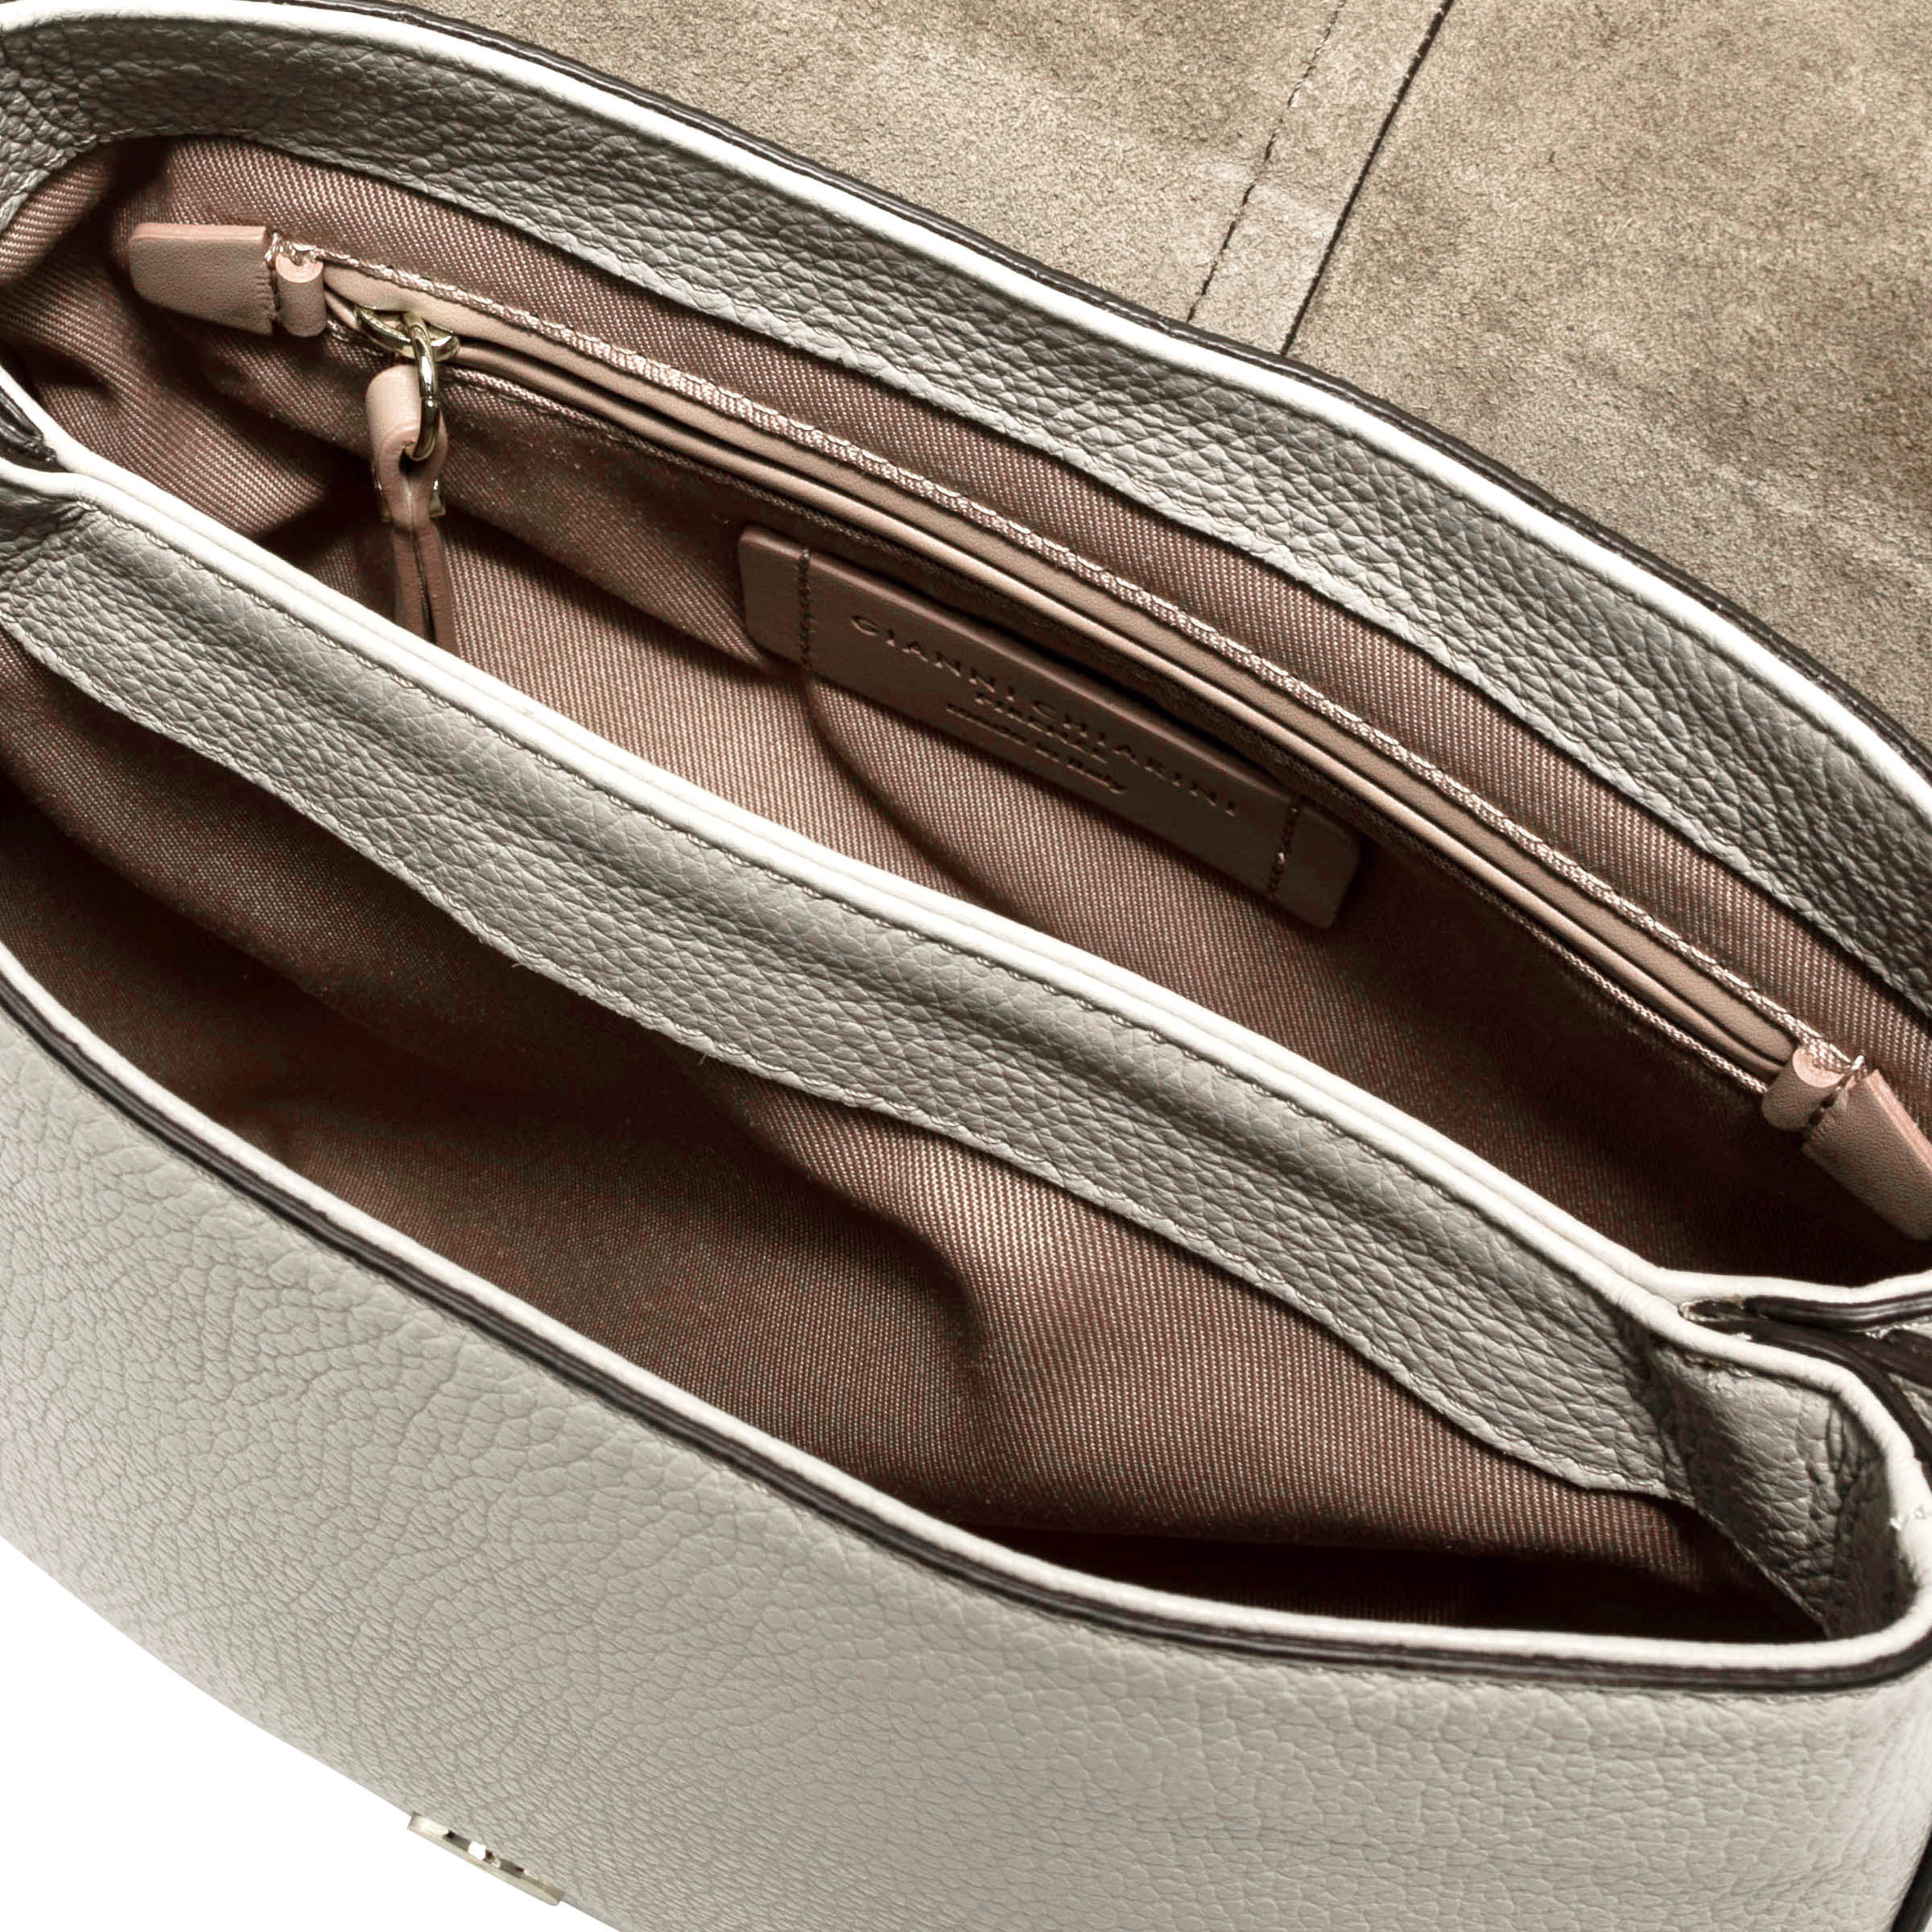 Gianni Chiarini - Helena Round bag in leather, White, large image number 4